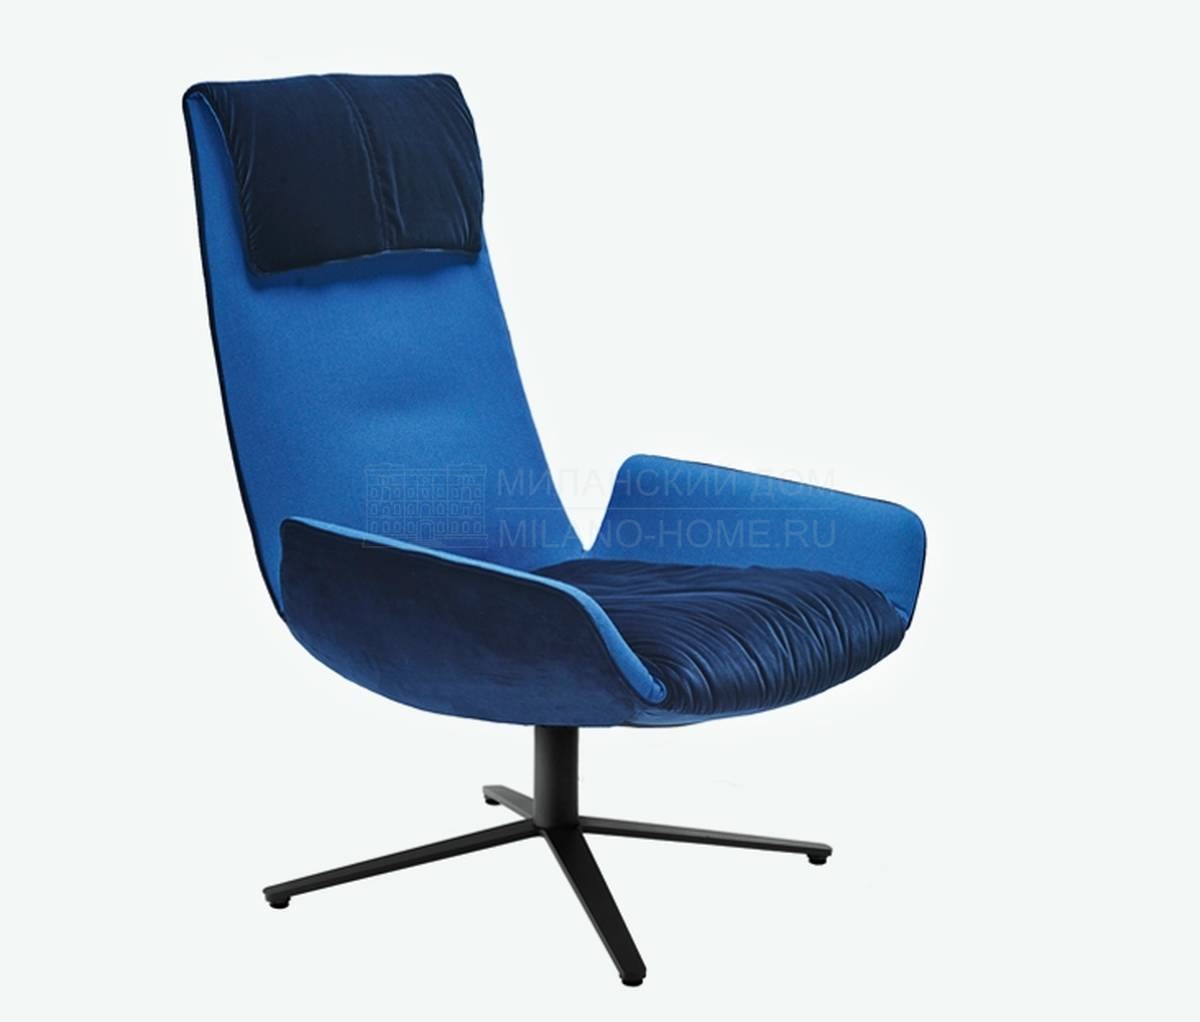 Лаунж кресло Amelie armchair blue из Италии фабрики FREIFRAU